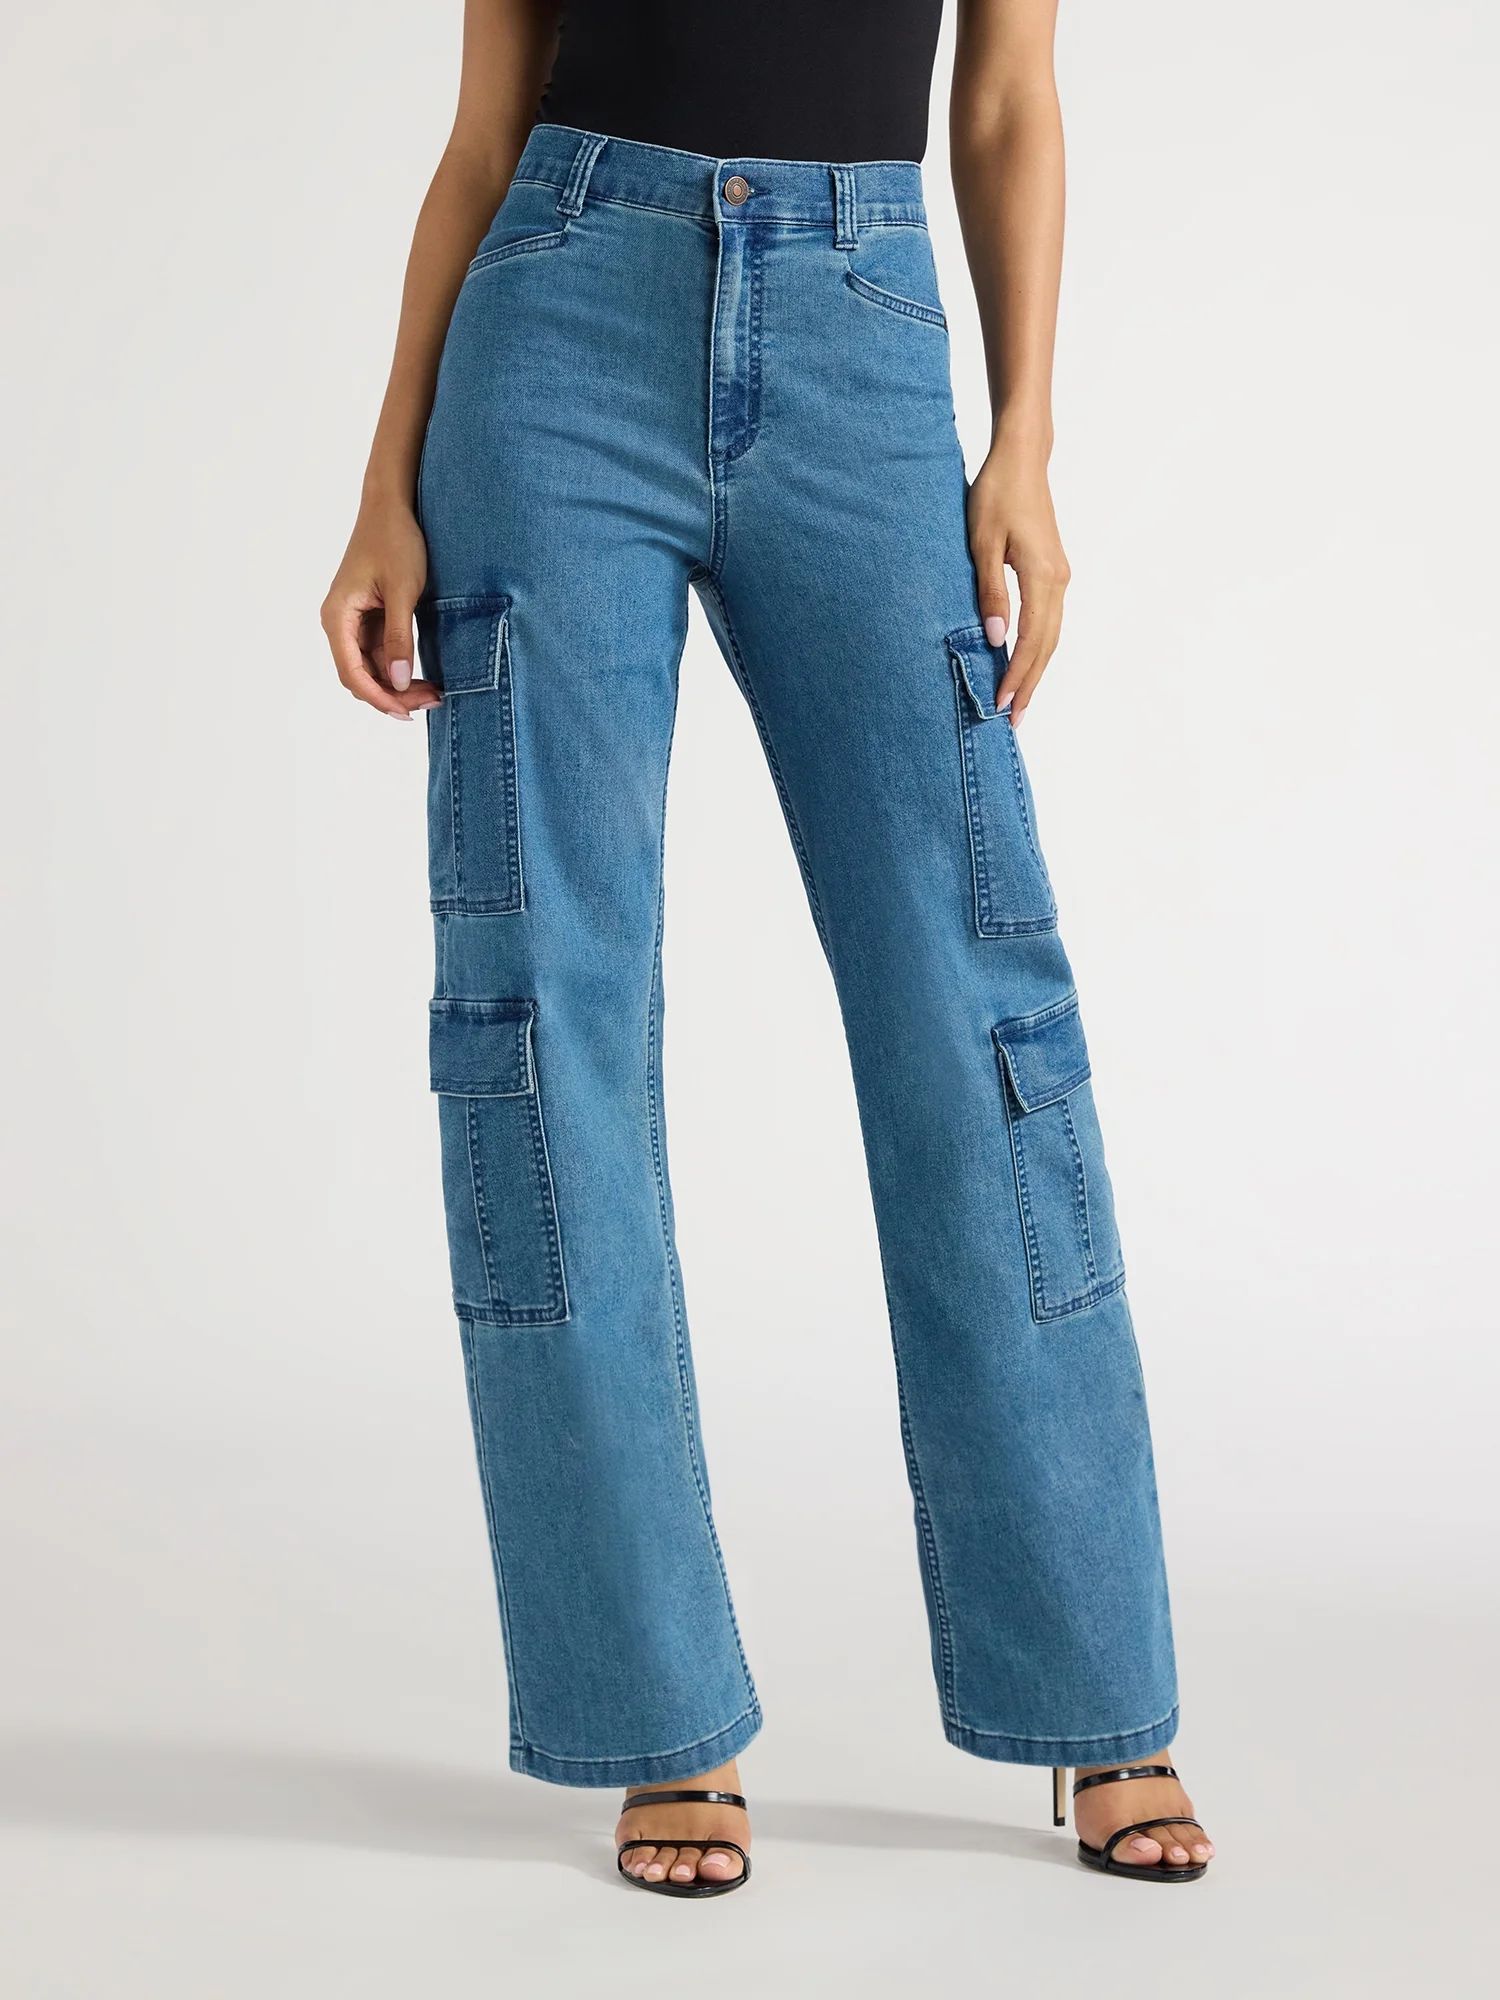 Sofia Jeans Women's Diana Cargo Pants, 33.5" Inseam, Sizes 2-20 | Walmart (US)